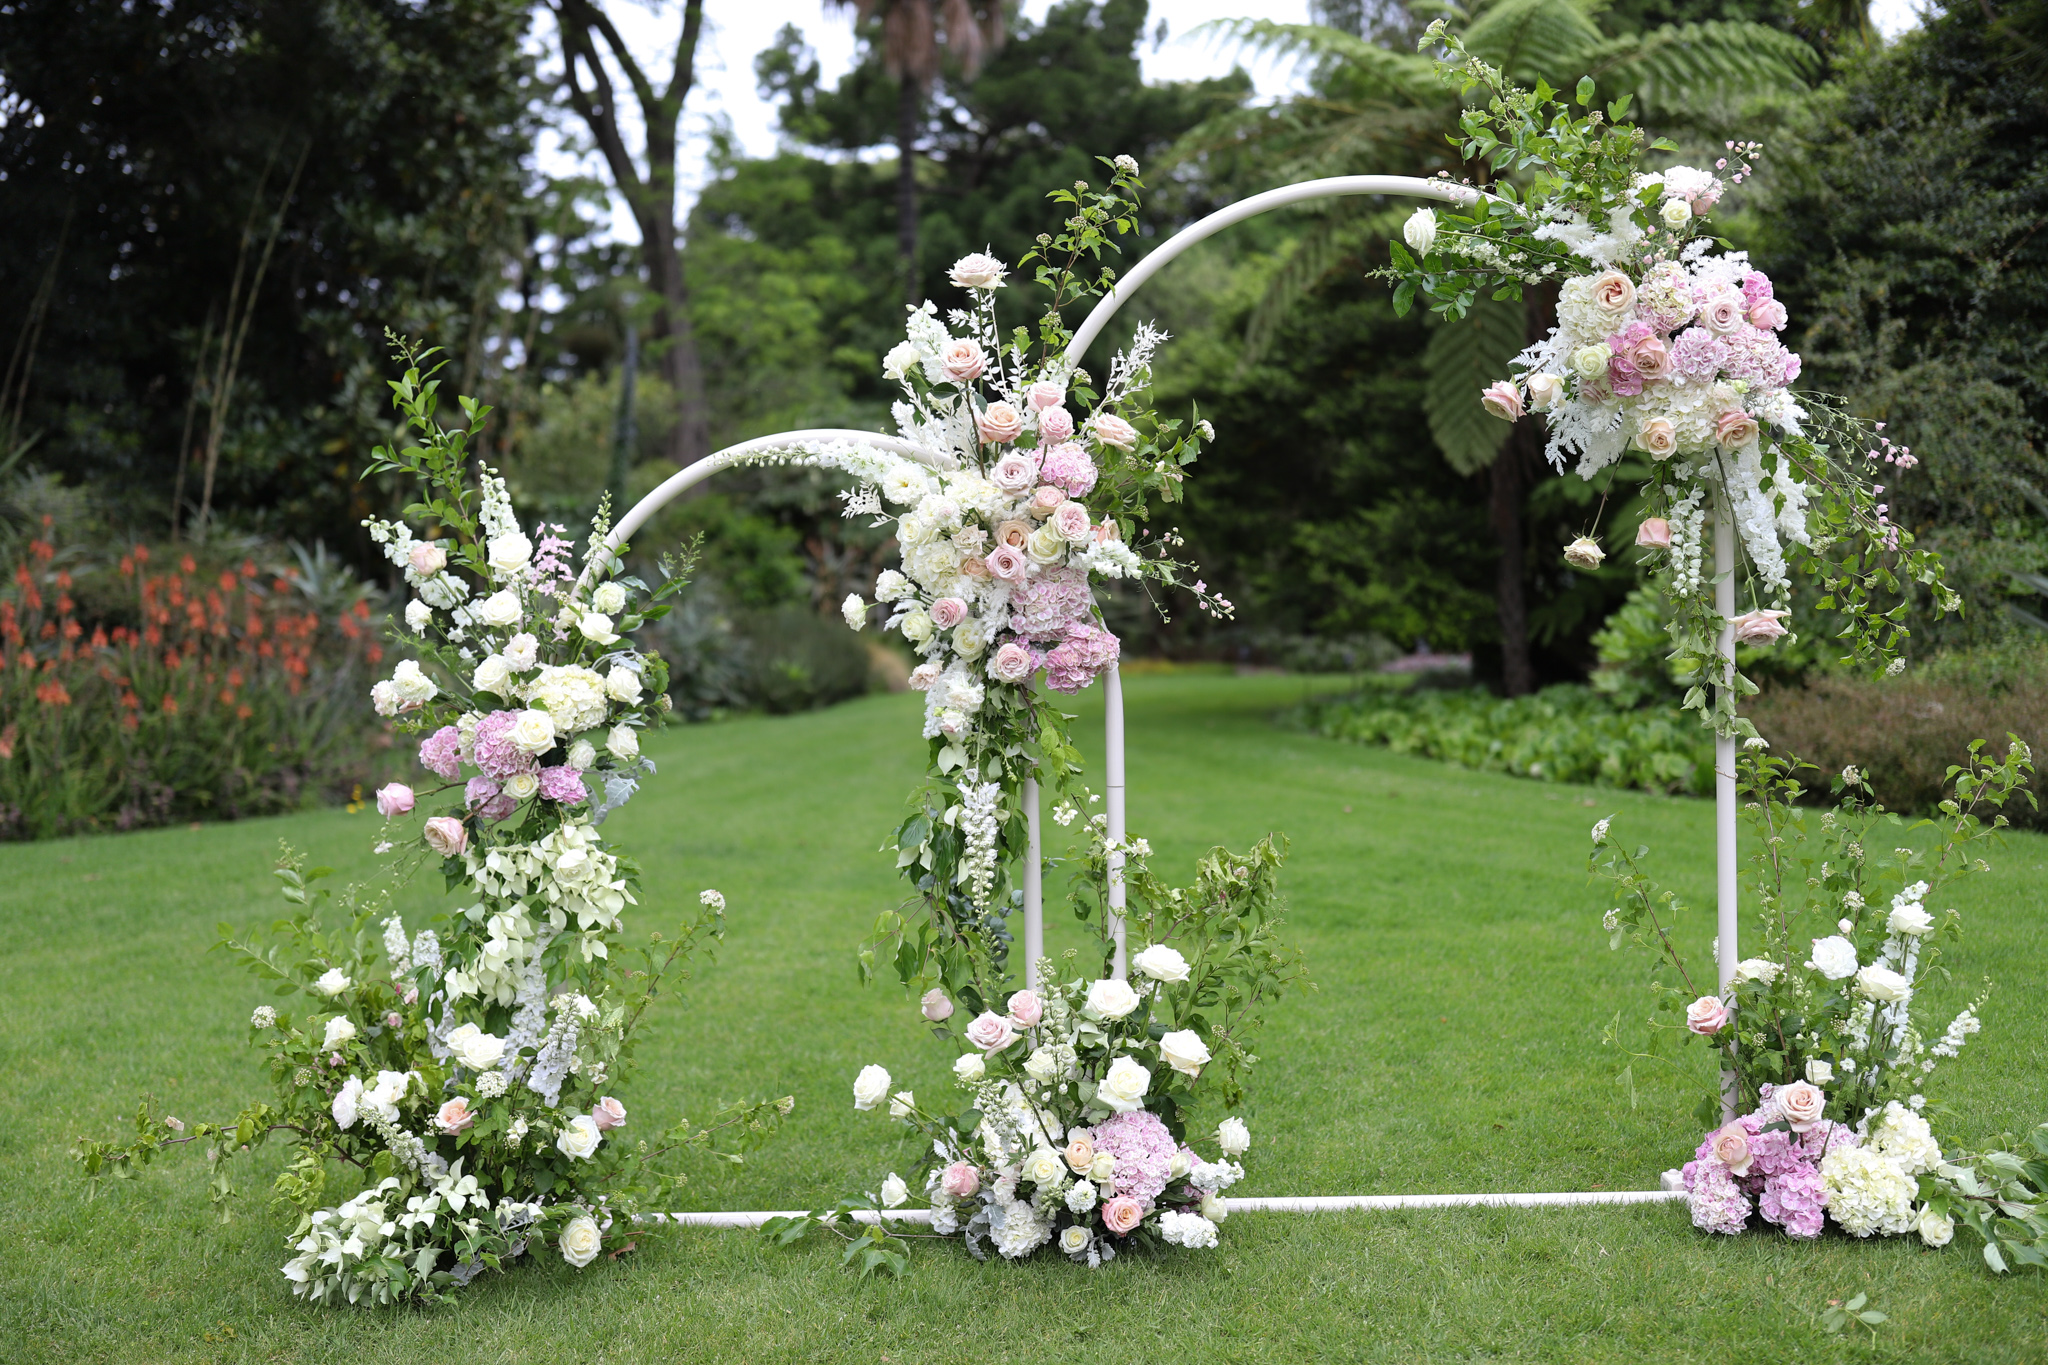 Botanic Garden Wedding